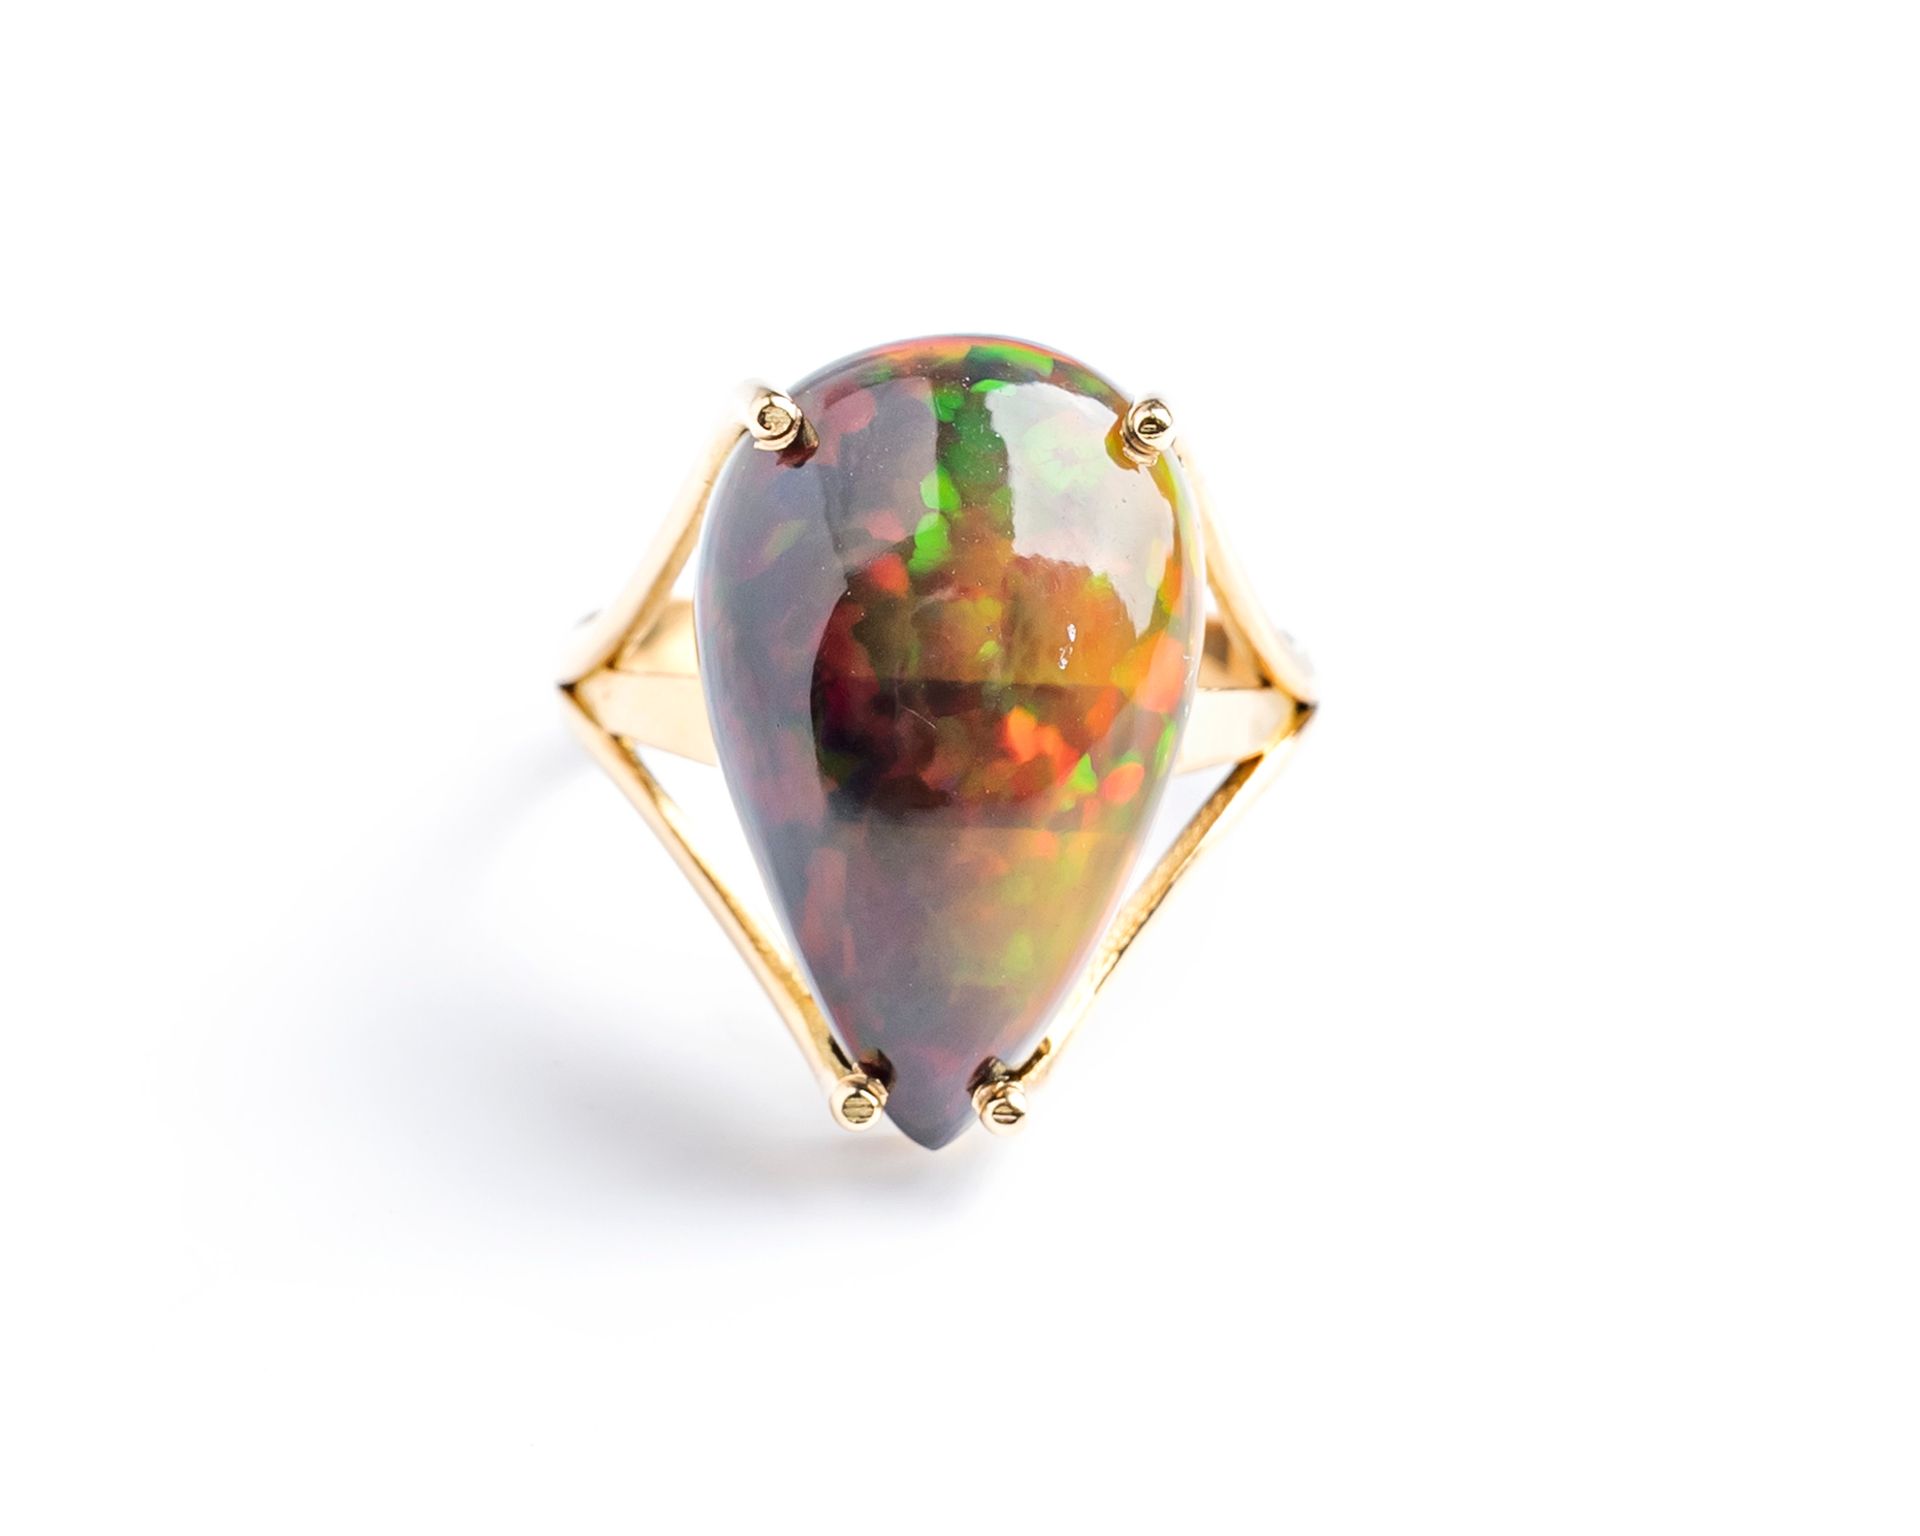 Null 18K黄金戒指（千分之七十五），装饰有一颗约8克拉的凸面黑蛋白石，美丽的虹彩和美丽的色彩游戏
手指尺寸：54
毛重：5.3克